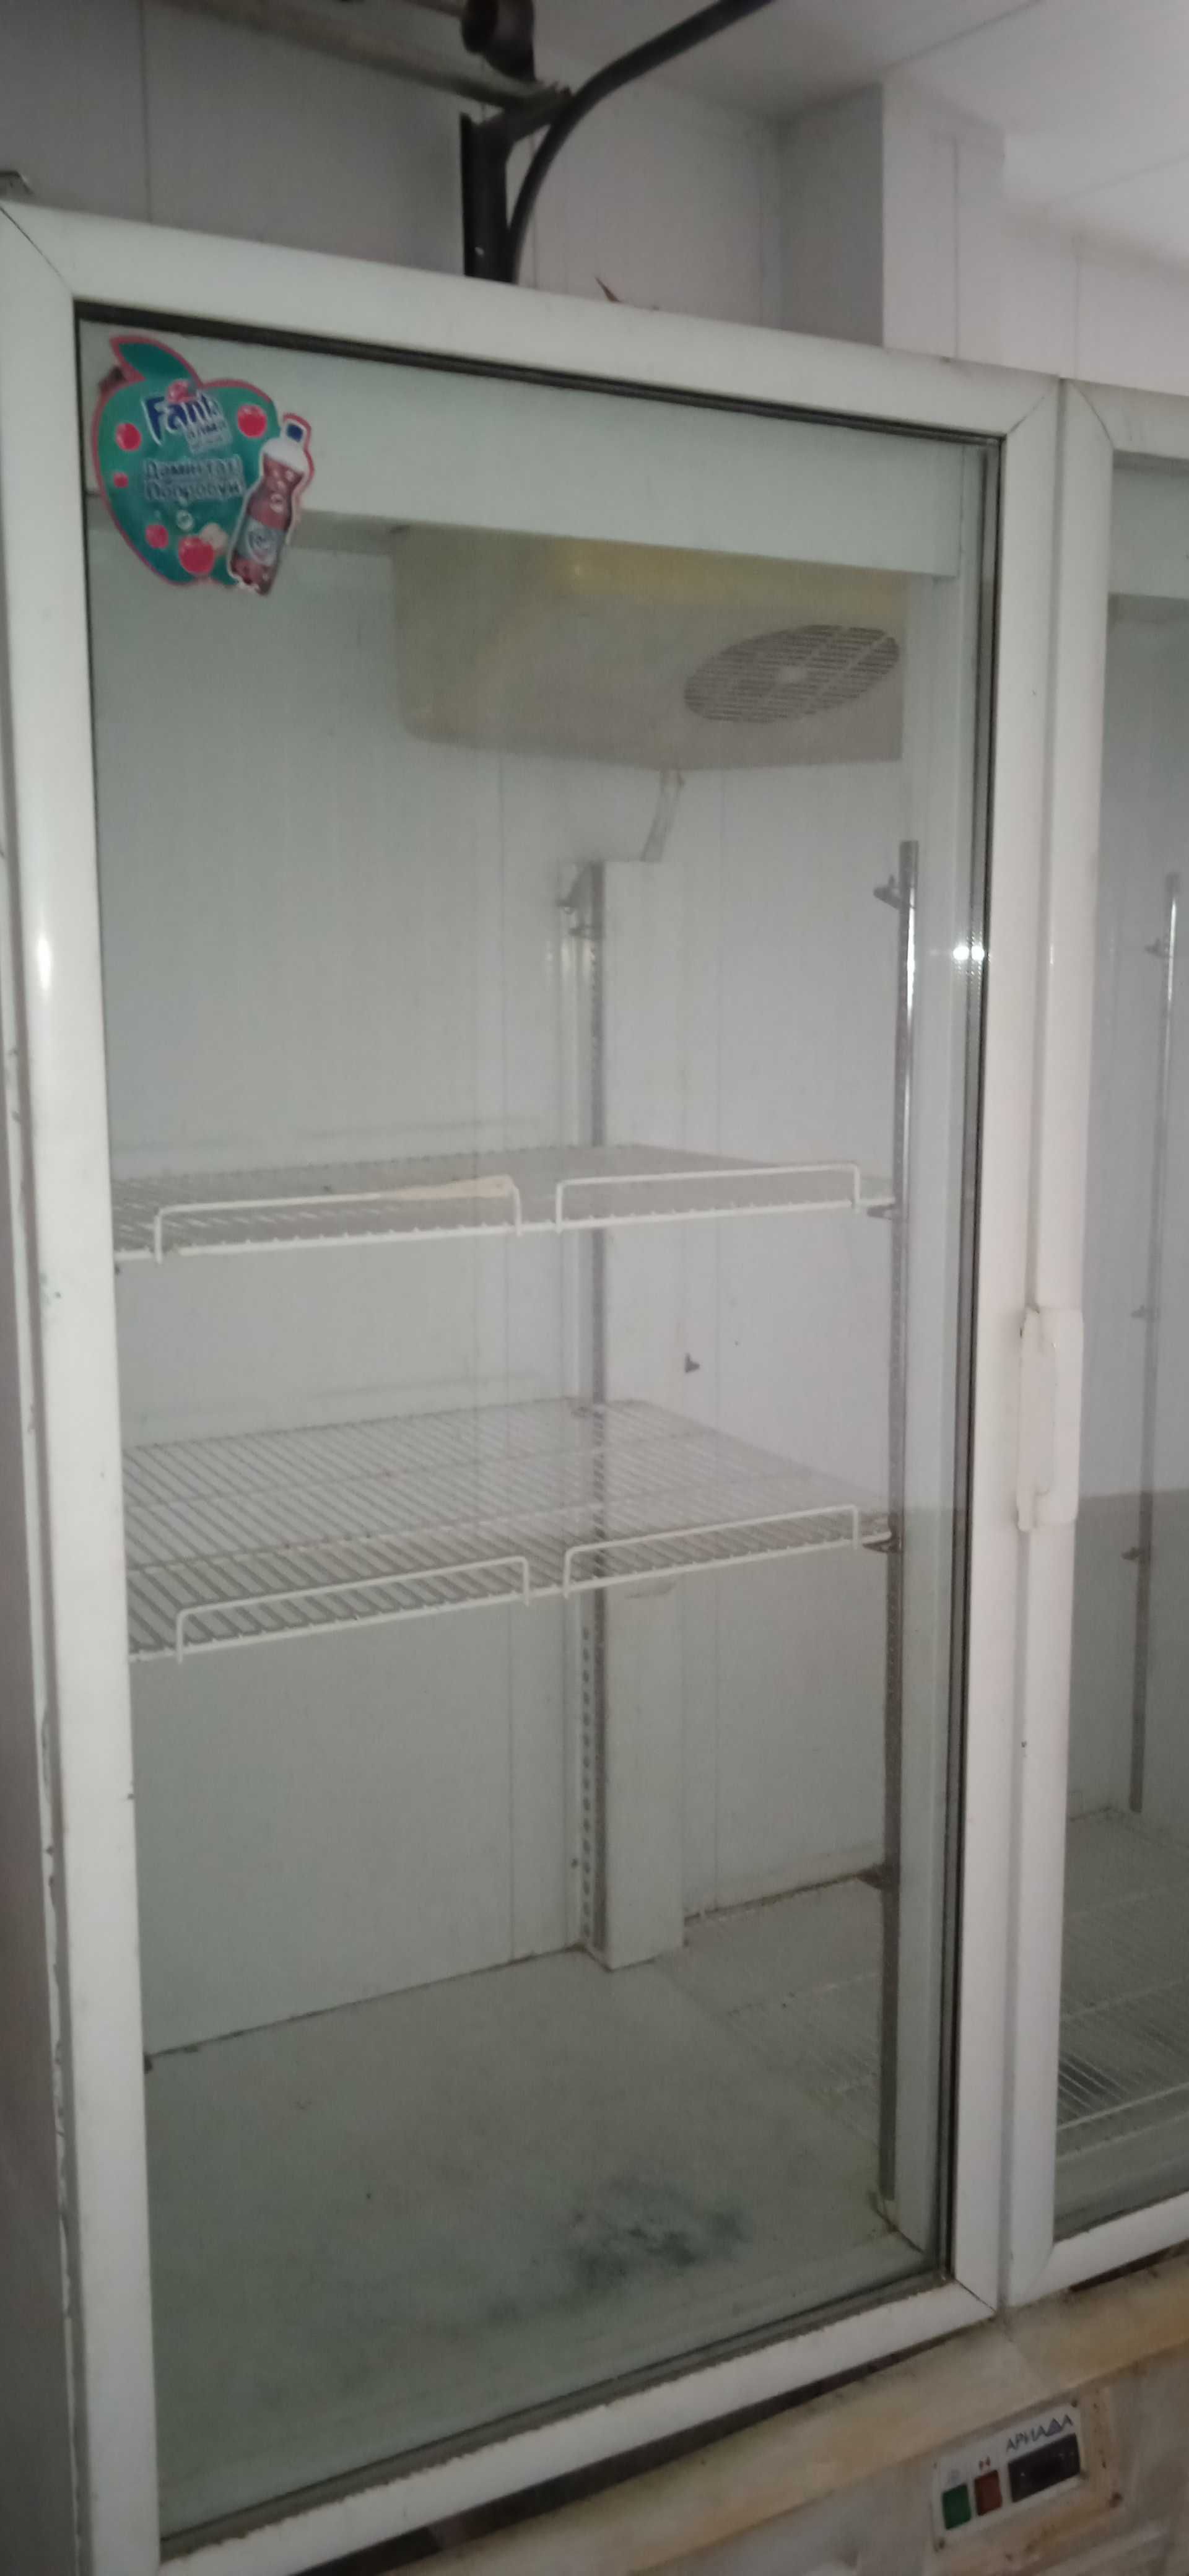 Продам холодильник Ариада